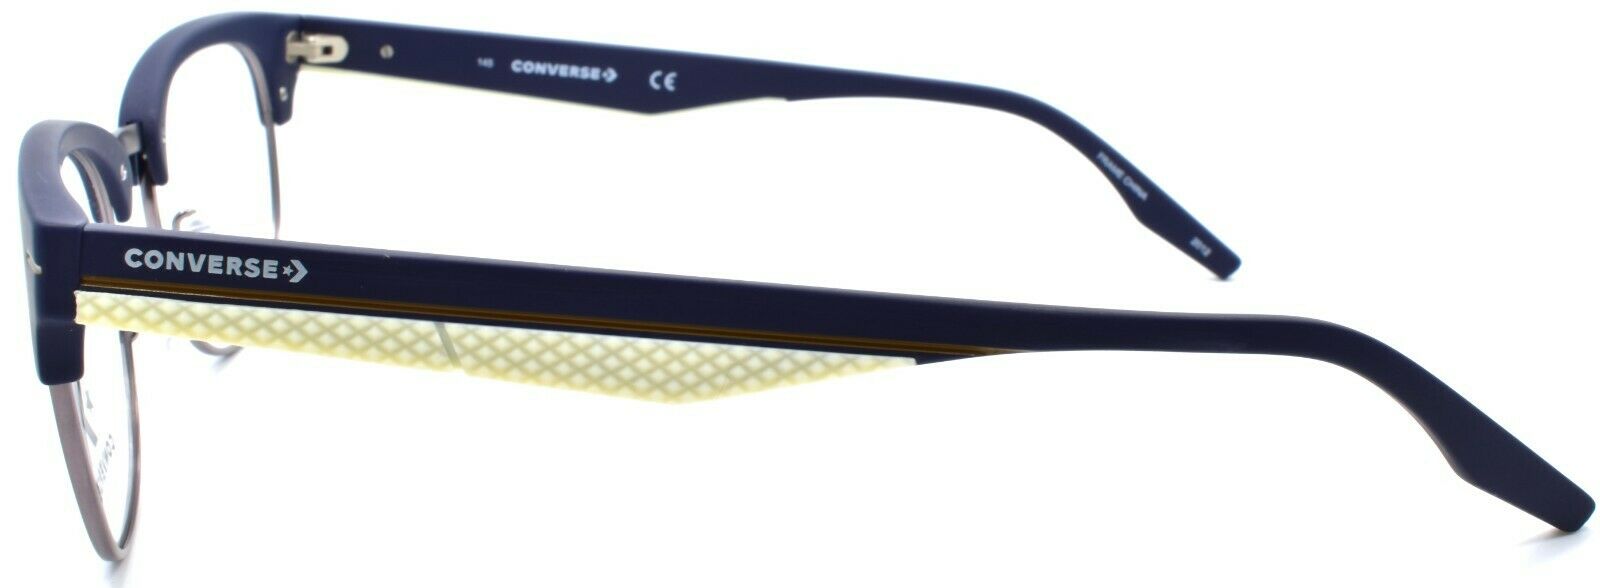 3-CONVERSE CV3006 411 Men's Eyeglasses Frames 52-20-145 Matte Obsidian-886895508070-IKSpecs